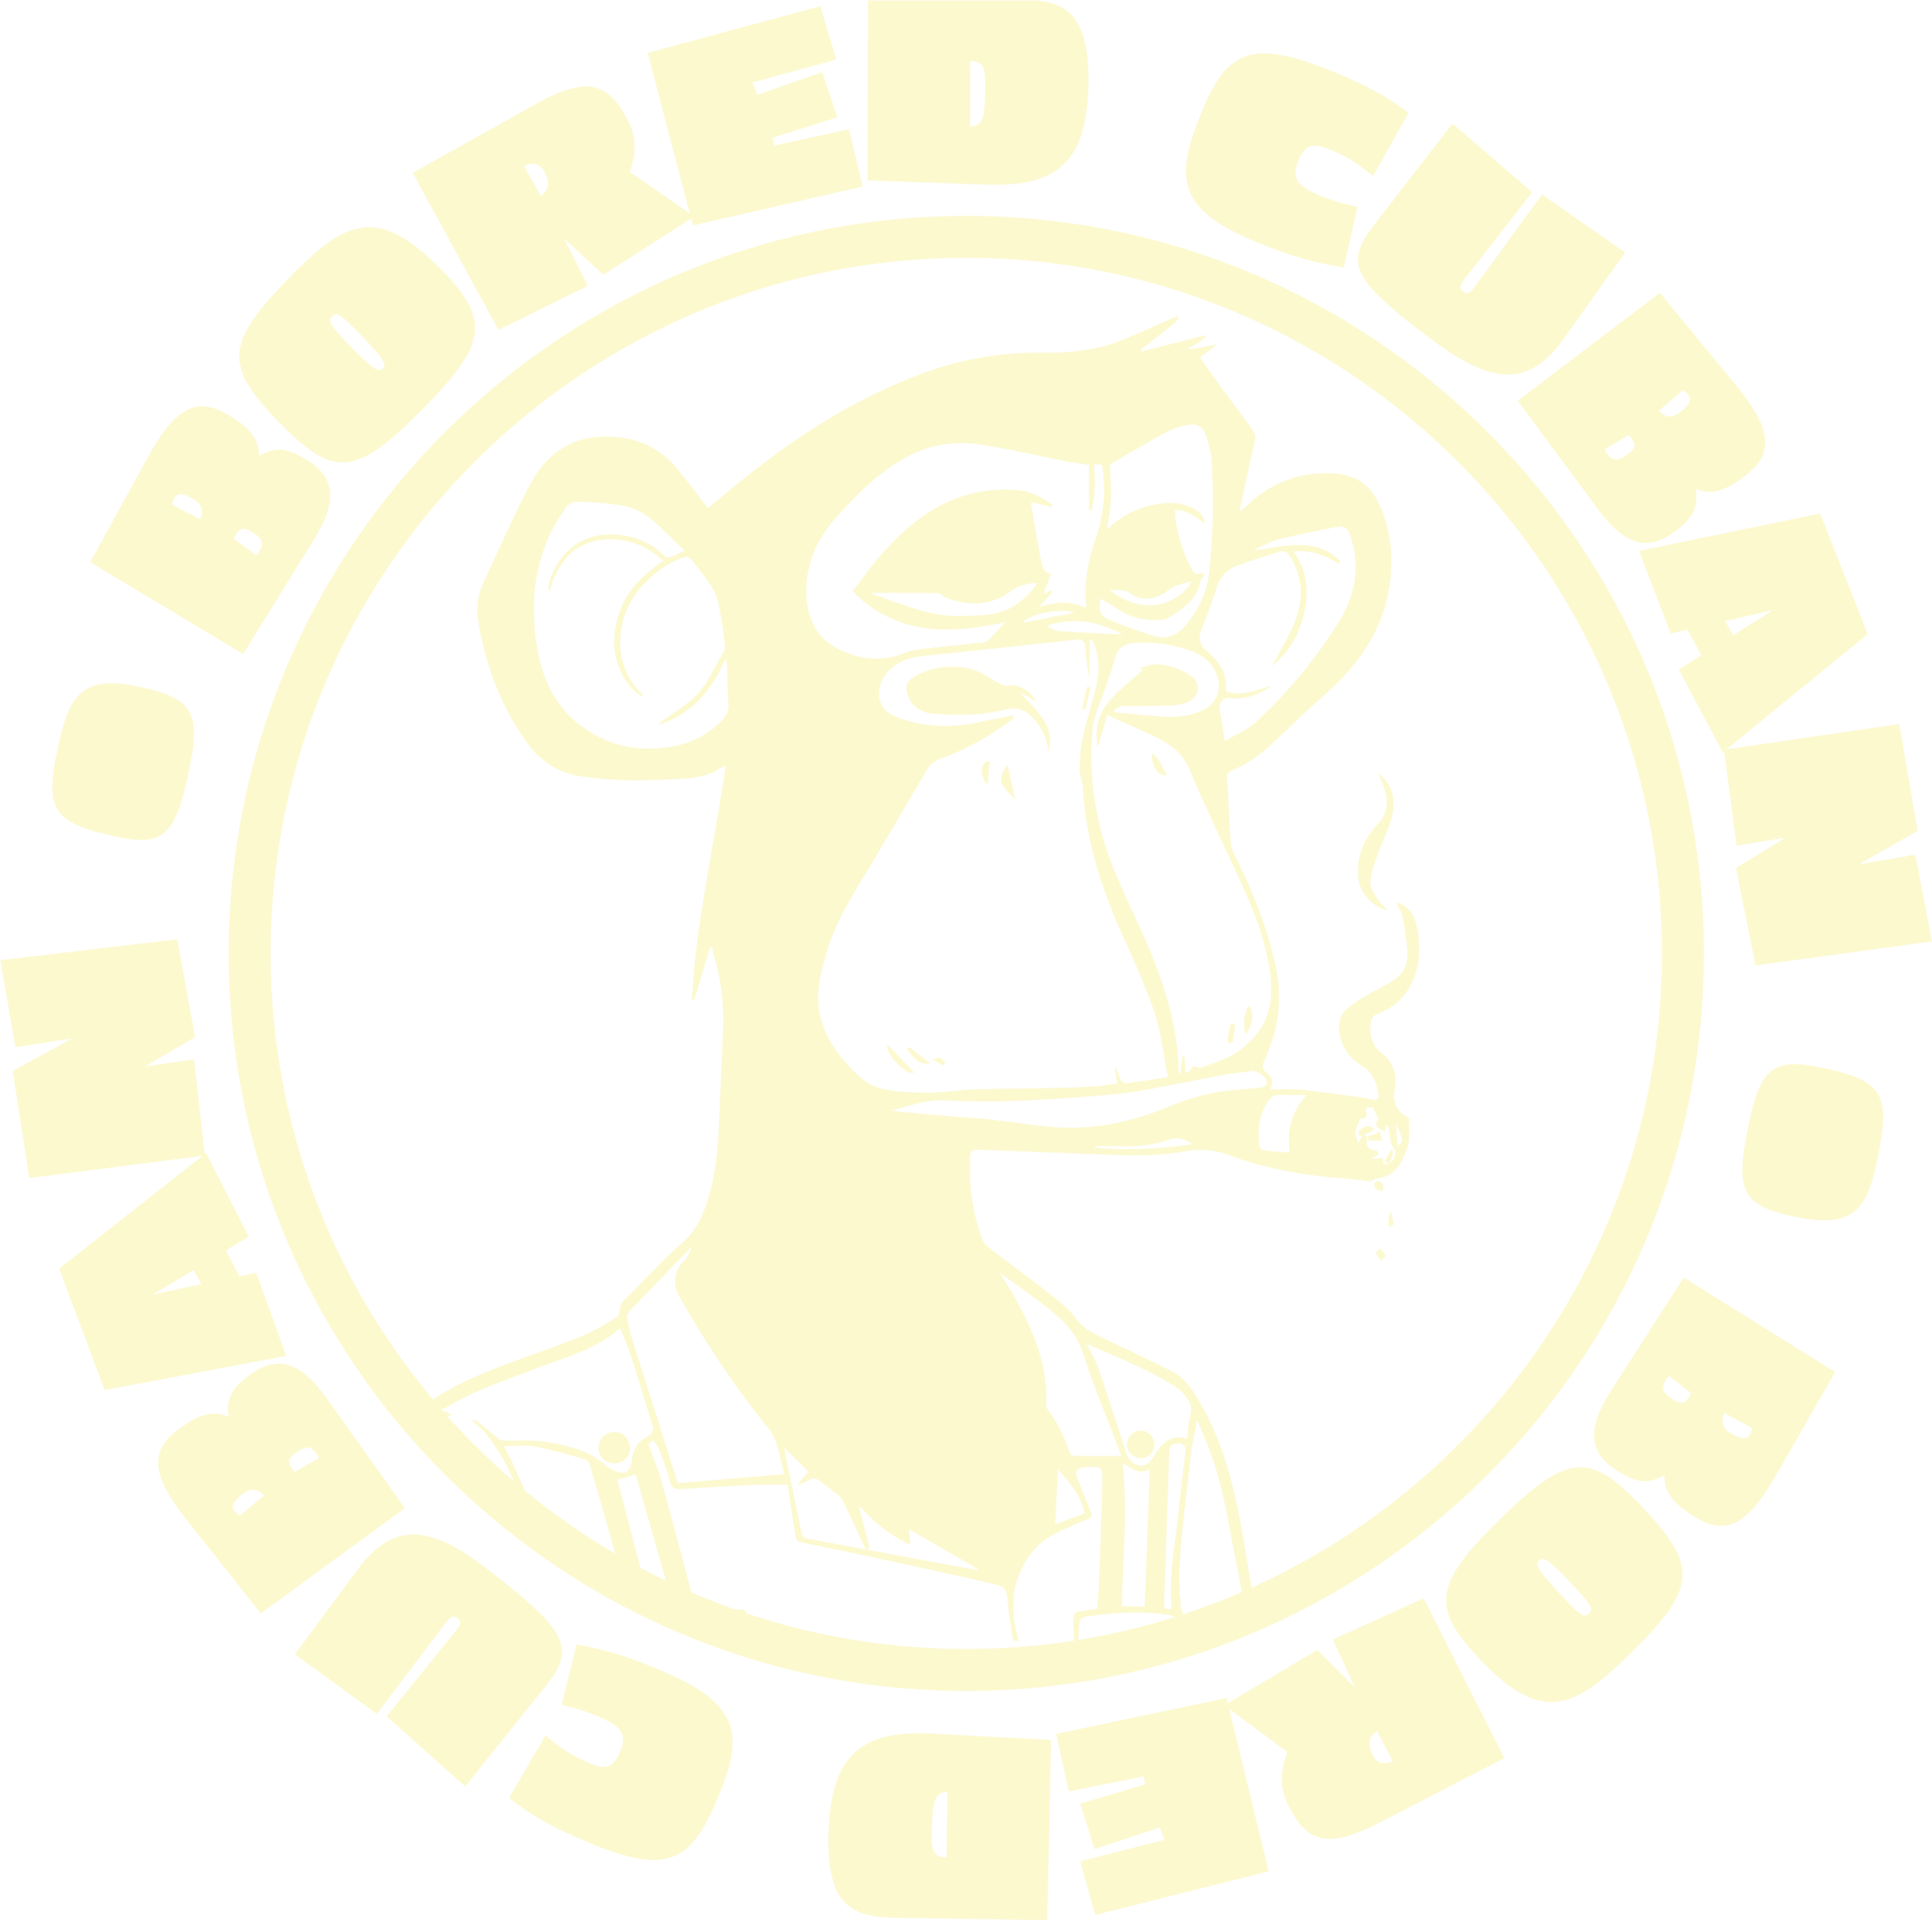 Bored Cuban Logo